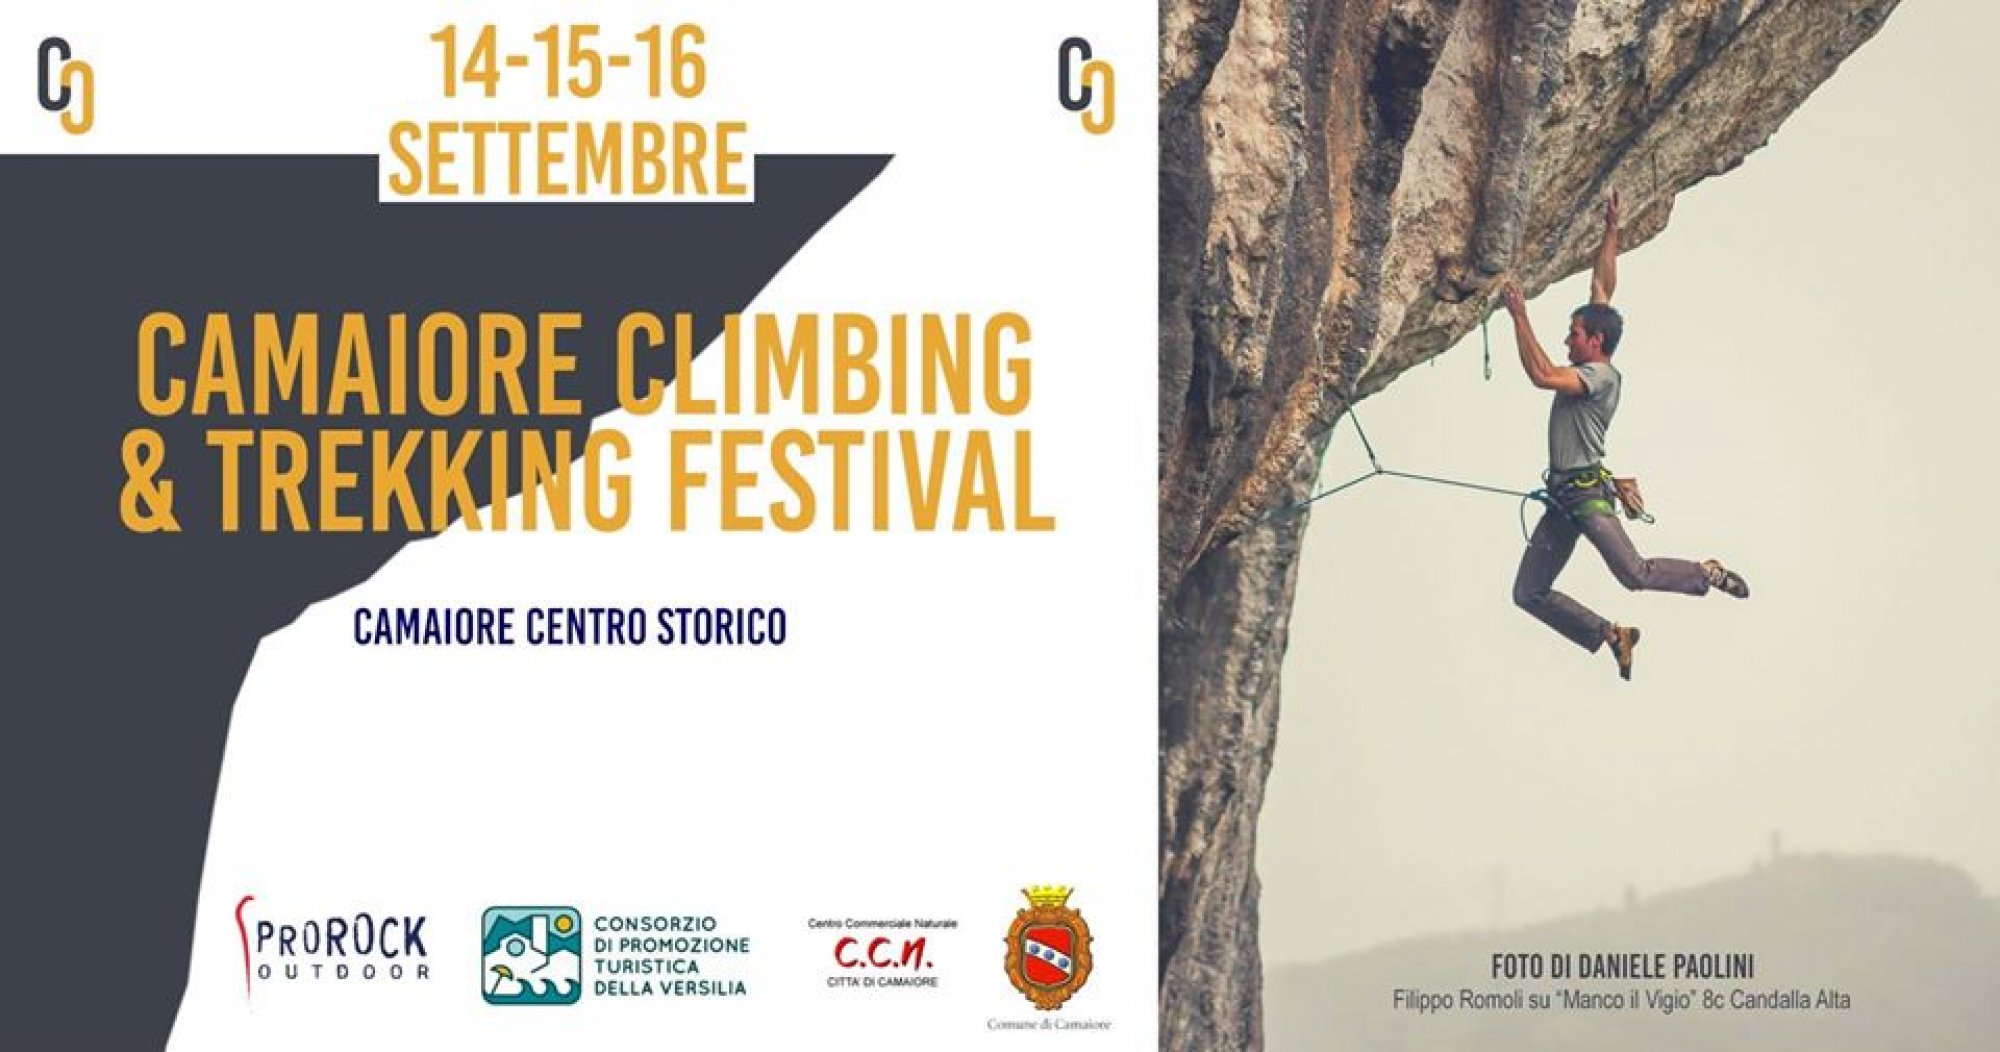 Camaiore Climbing and Trekking Festival 2018